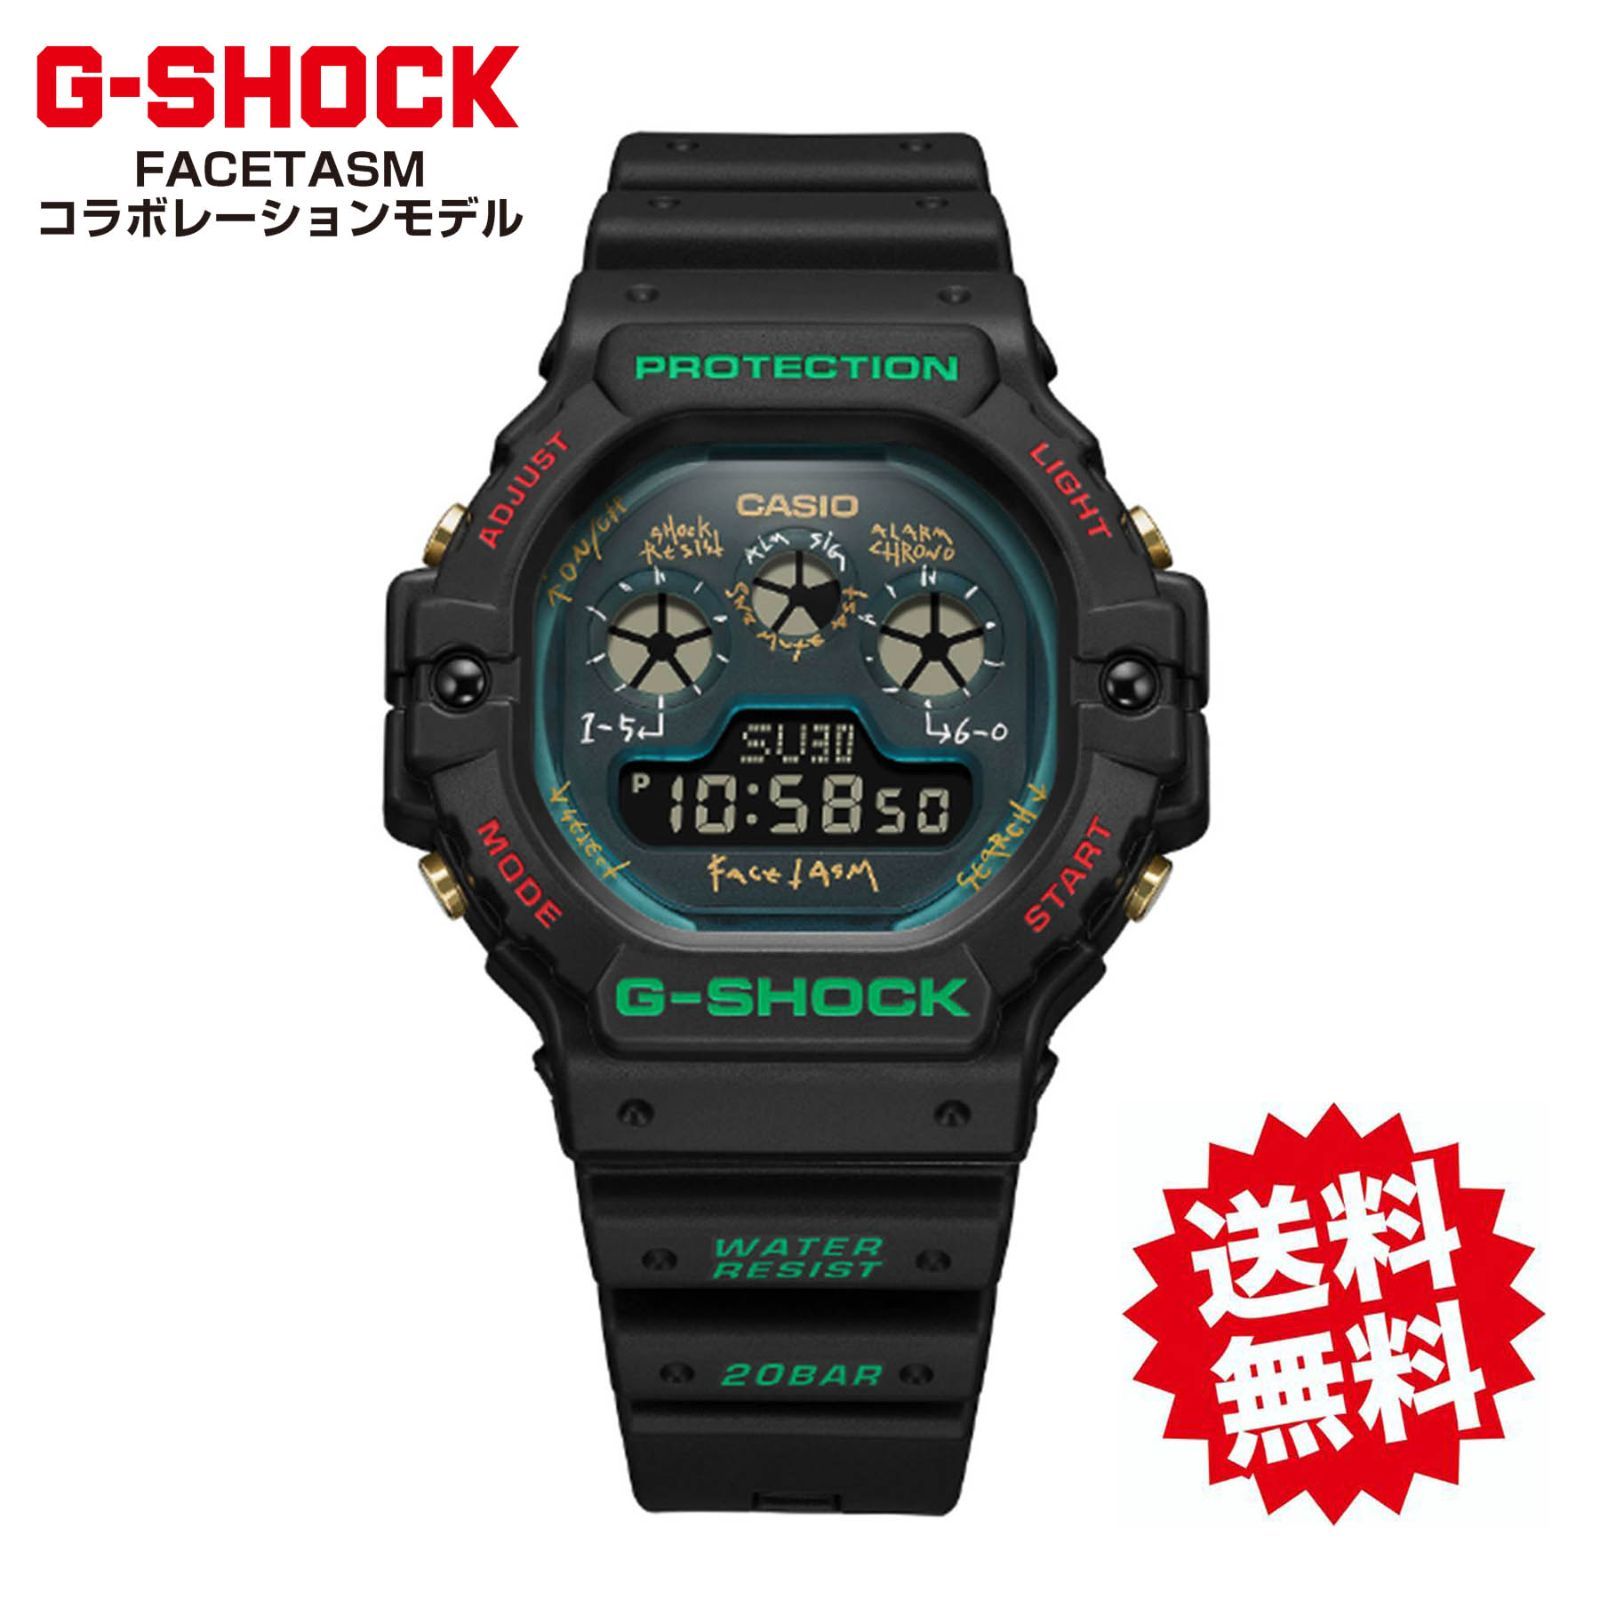 CASIO/G-SHOCK FACETASMコラボレーション】DW-5900FA-1JR /Gショック ...